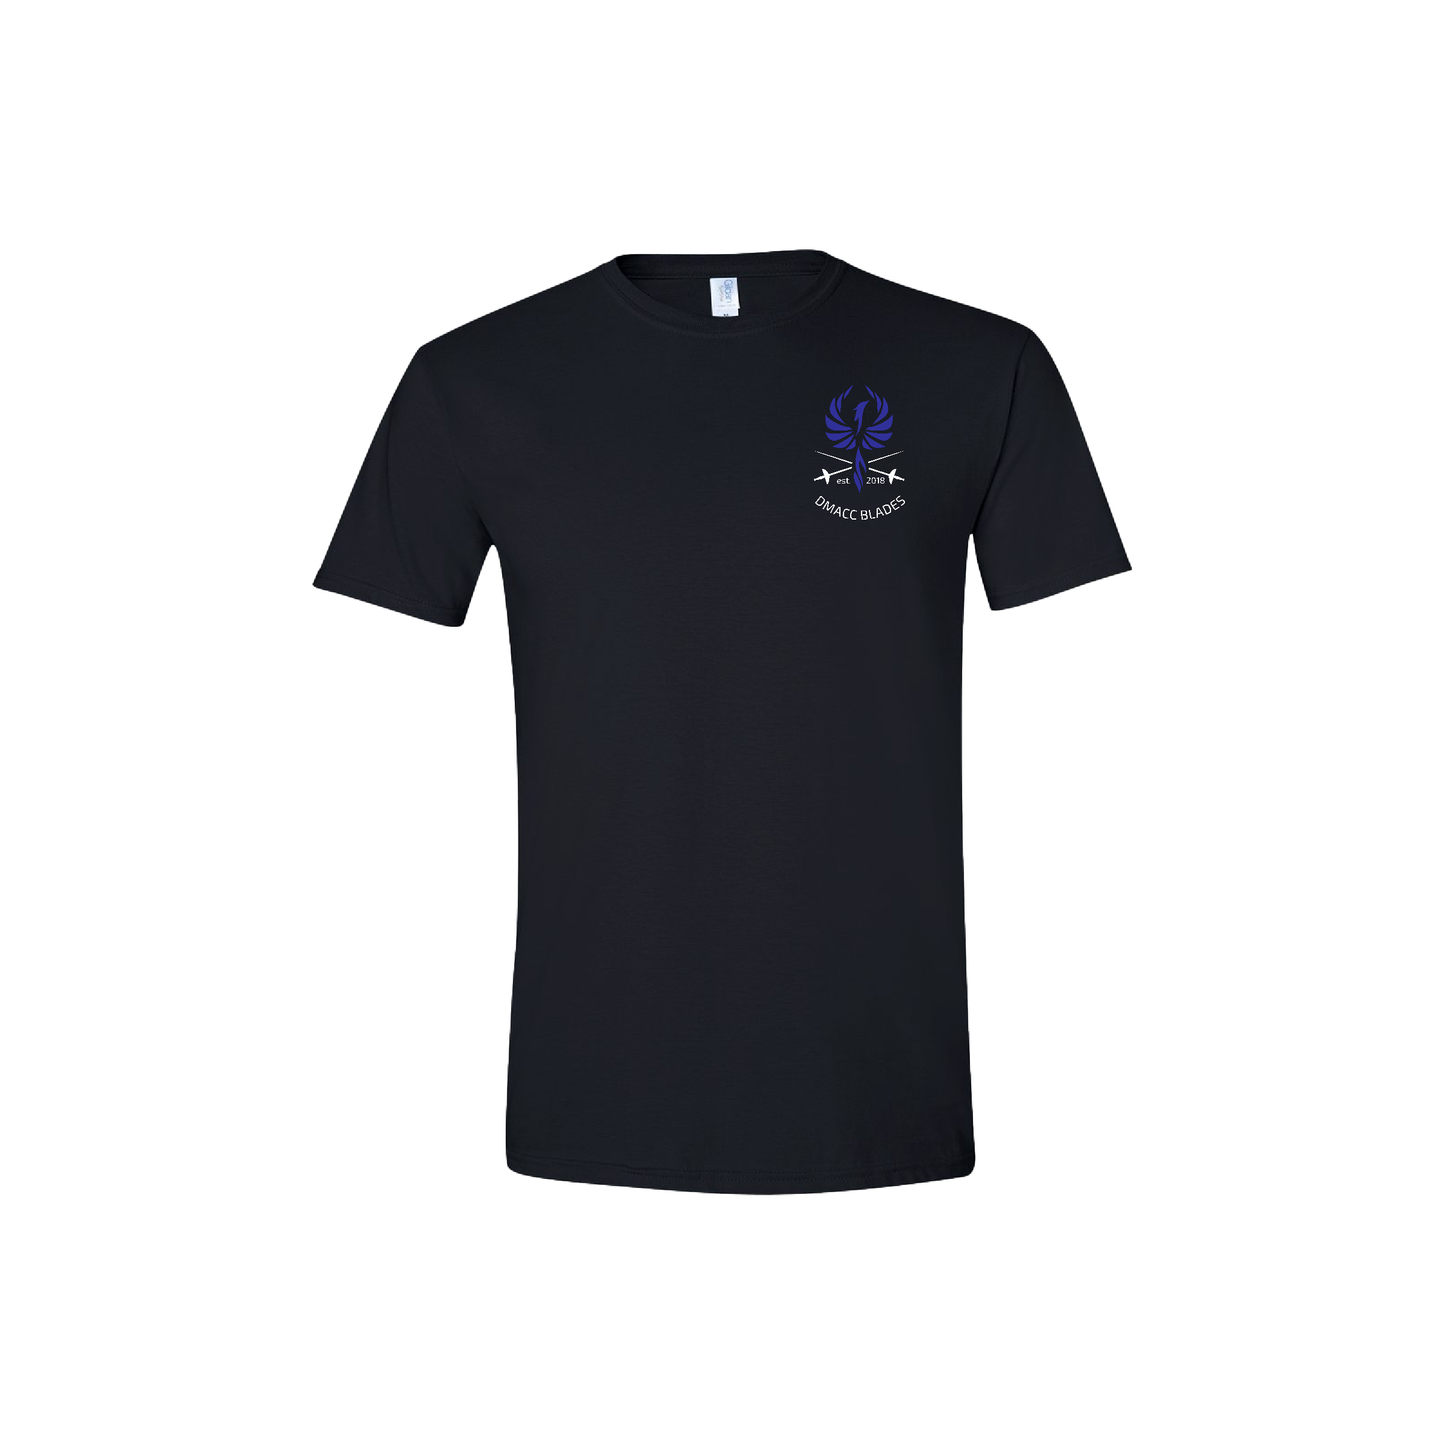 DMACC Blades Black Unisex T-Shirt